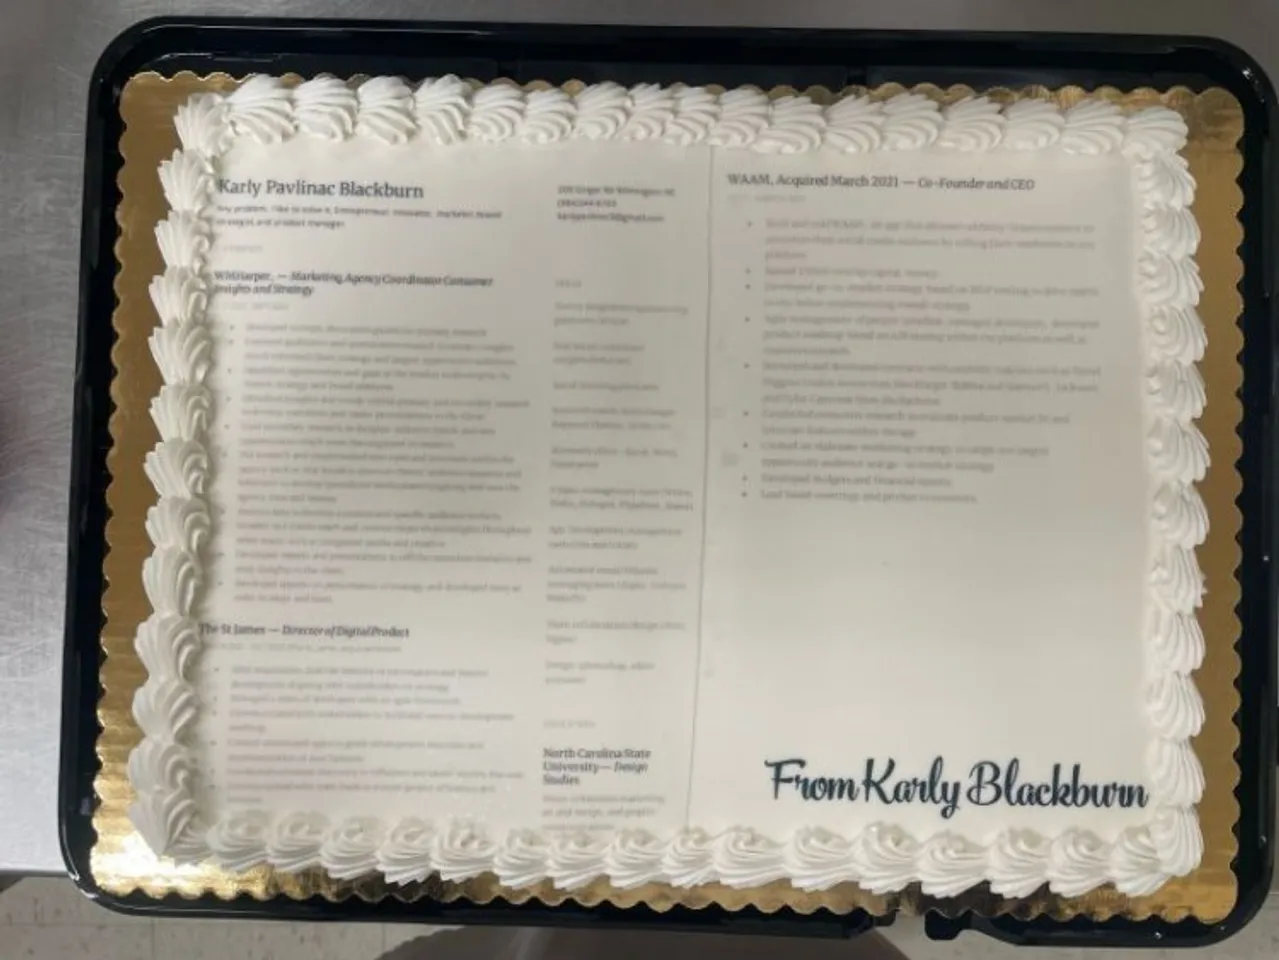 Karly Pavlinac Blackburn printed resume on the cake